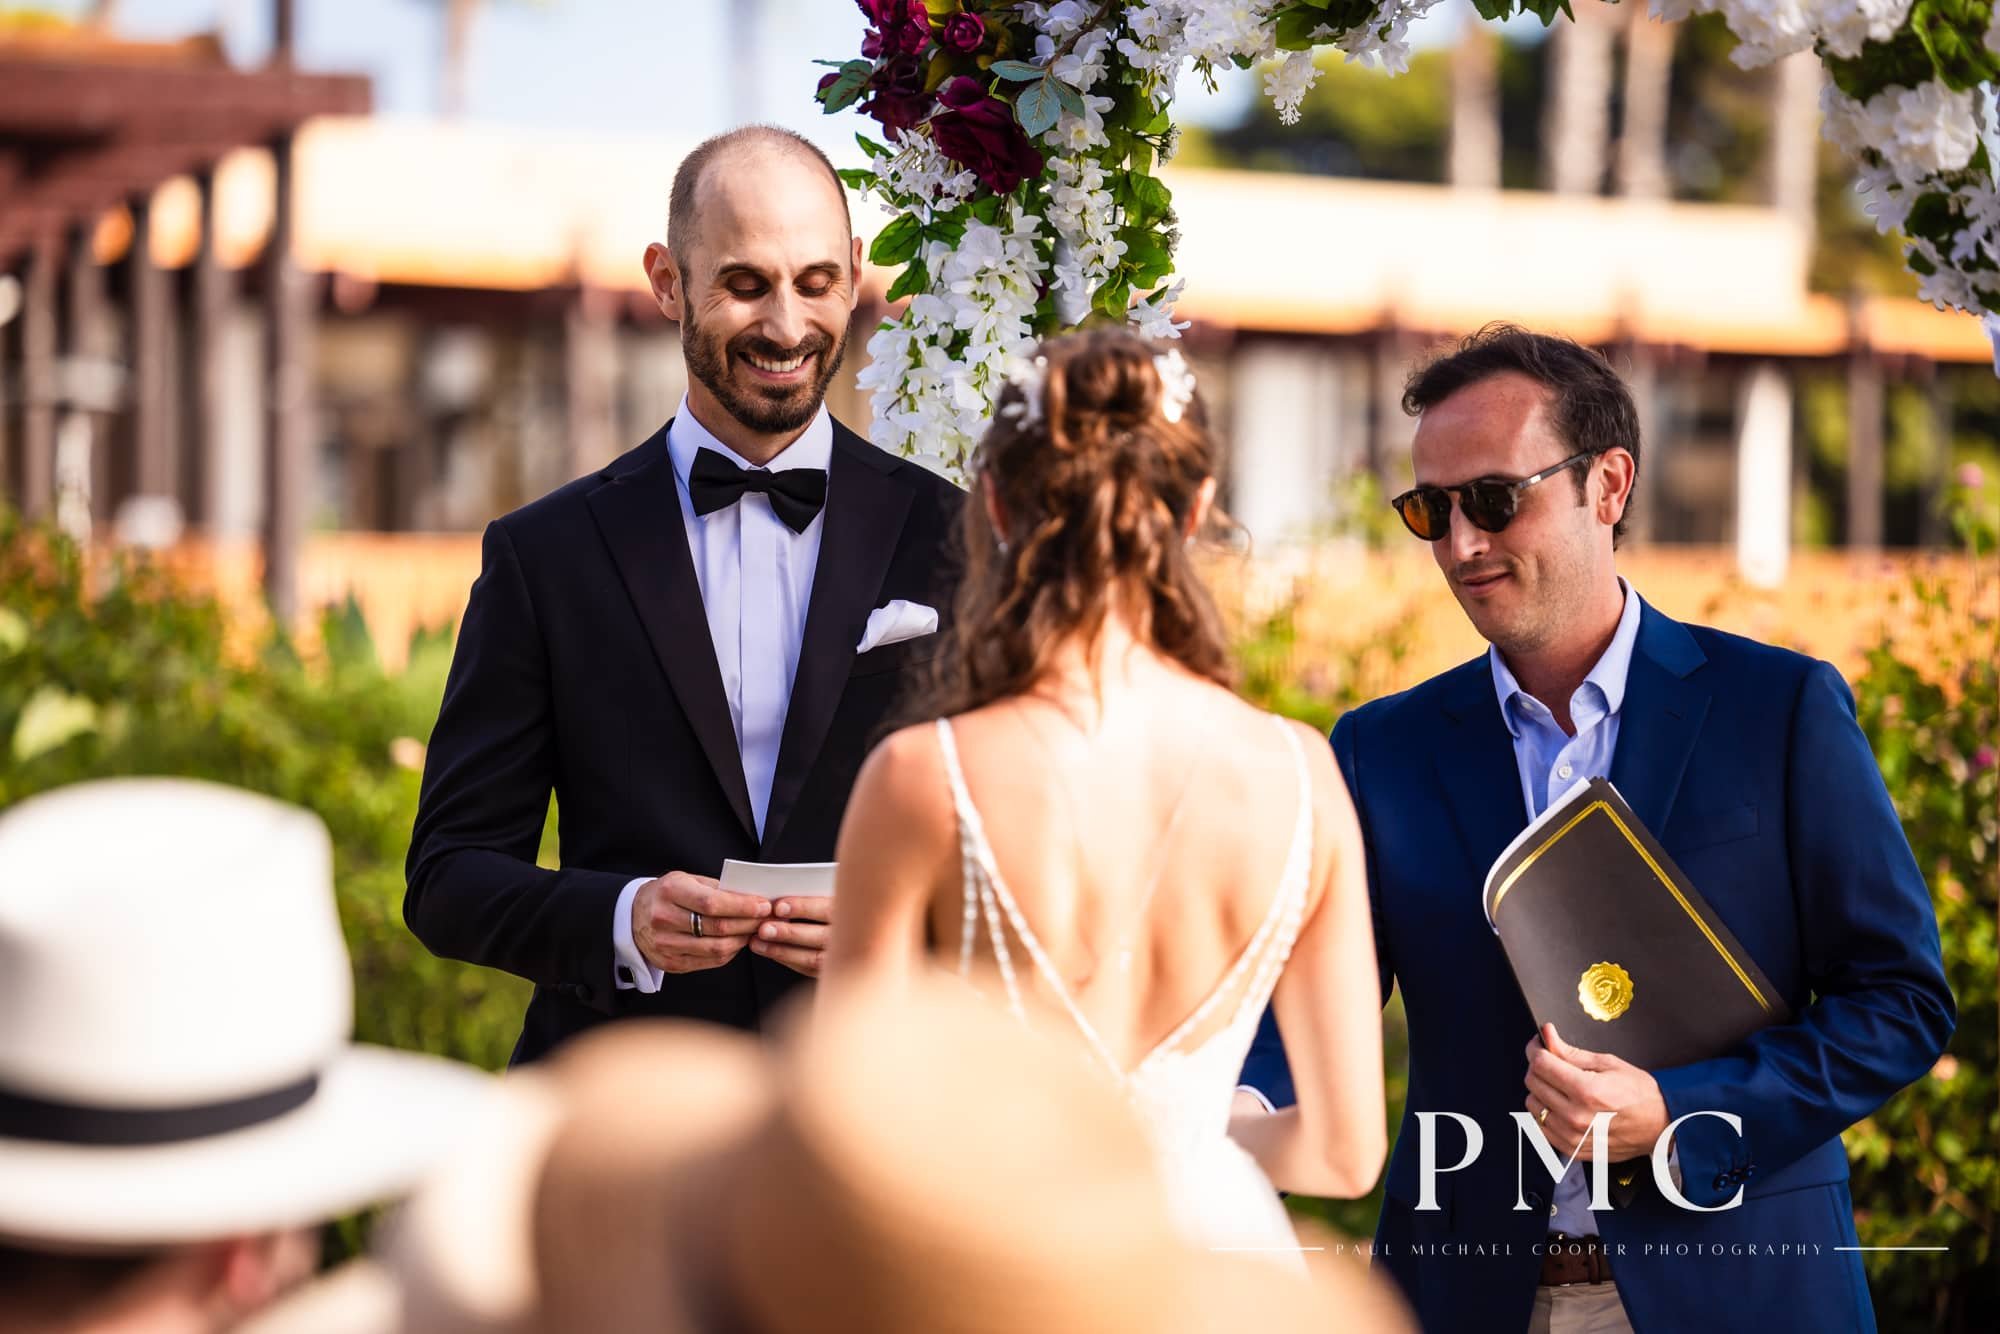 Paradise Point Resort & Spa - Summer Mission Bay Wedding - Best San Diego Wedding Photographer-52.jpg